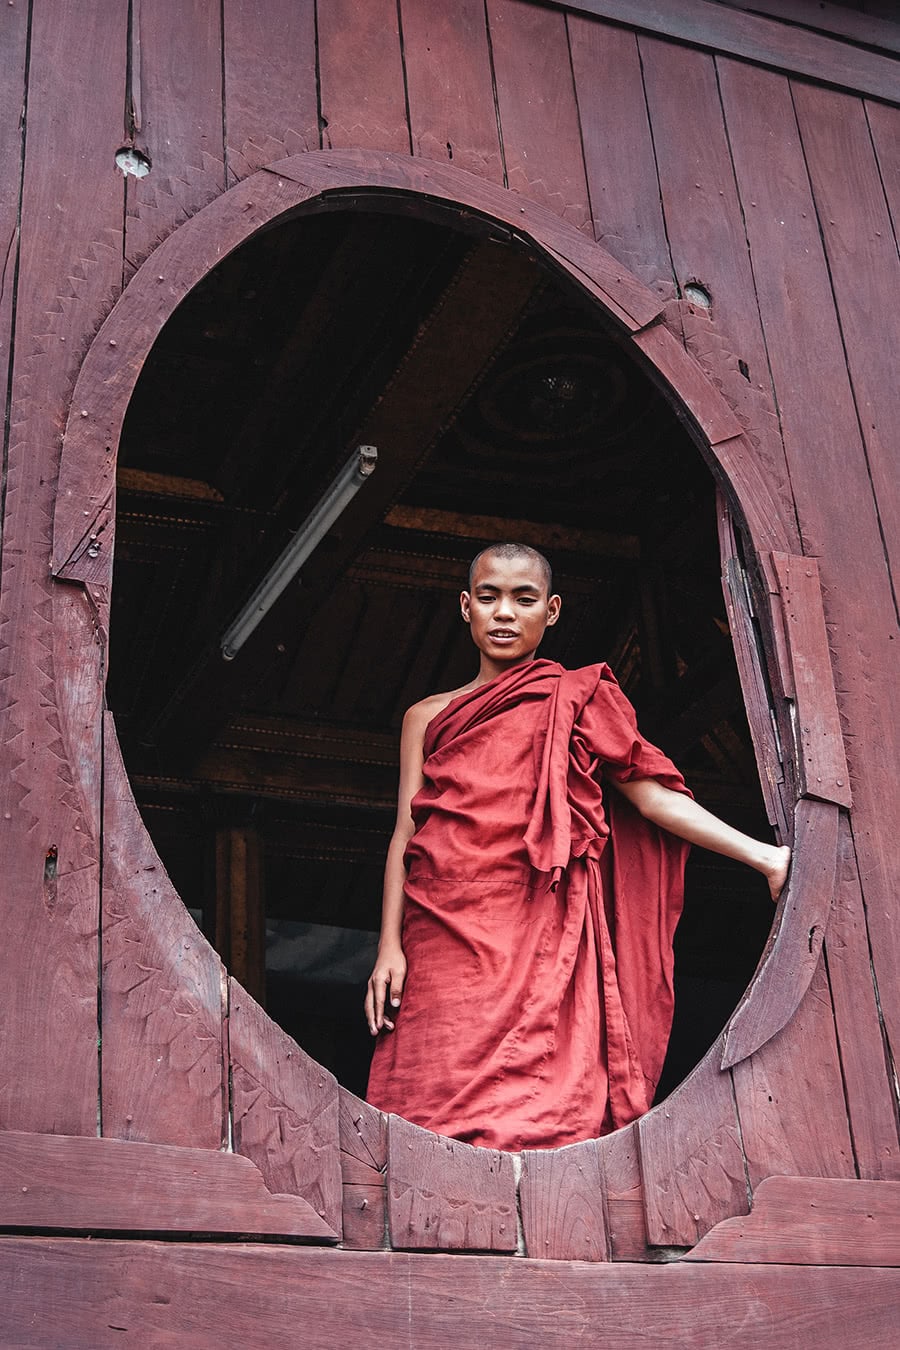 A monk at Shwe Yaunghwe Kyaung Monastery, Inle Lake.